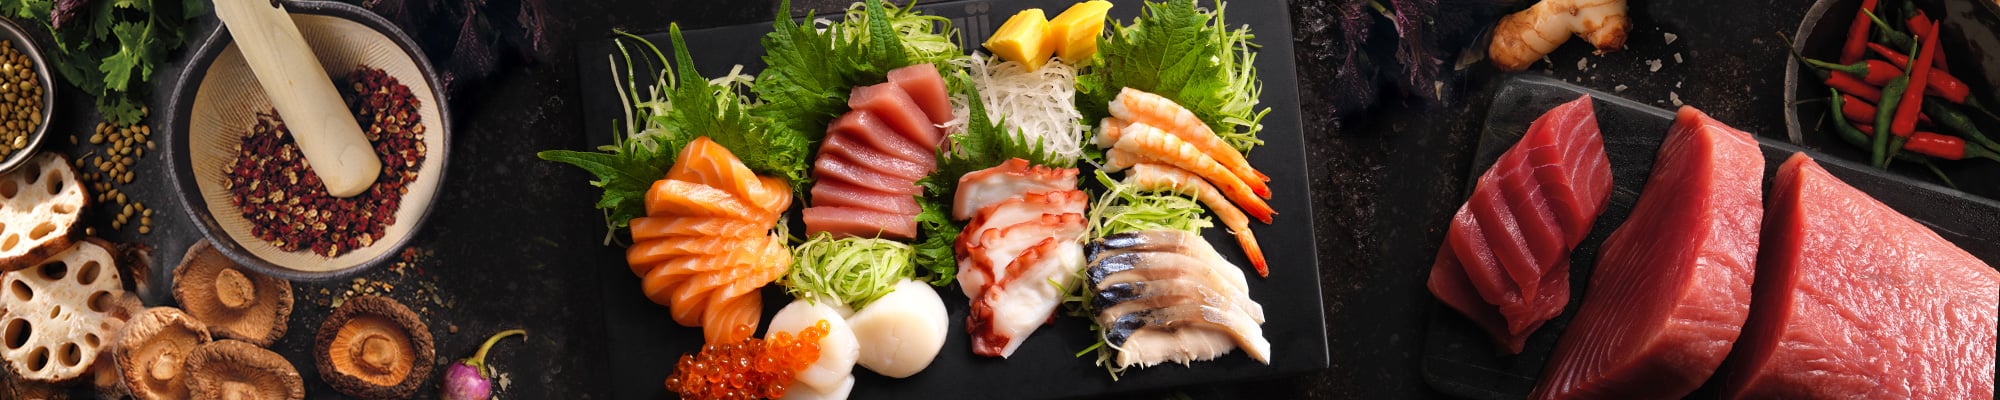 Okinii Sushi & Grill Warengruppenbild